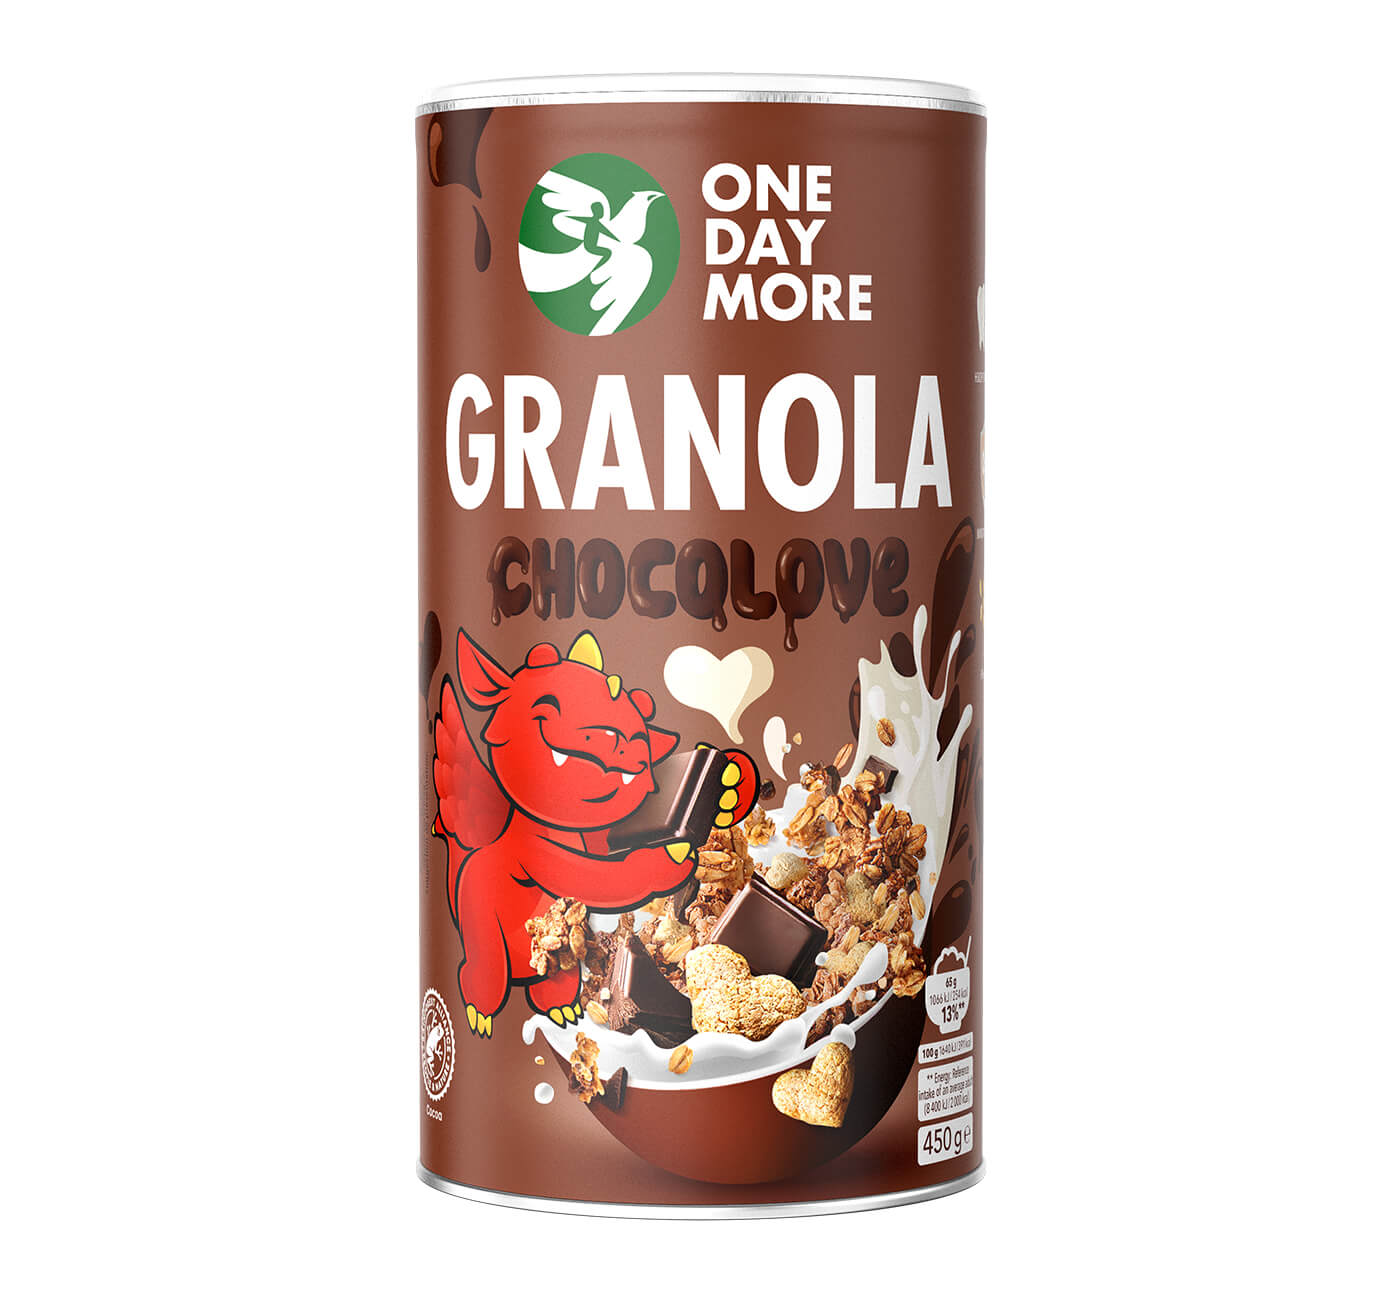 Granola ChocoLove